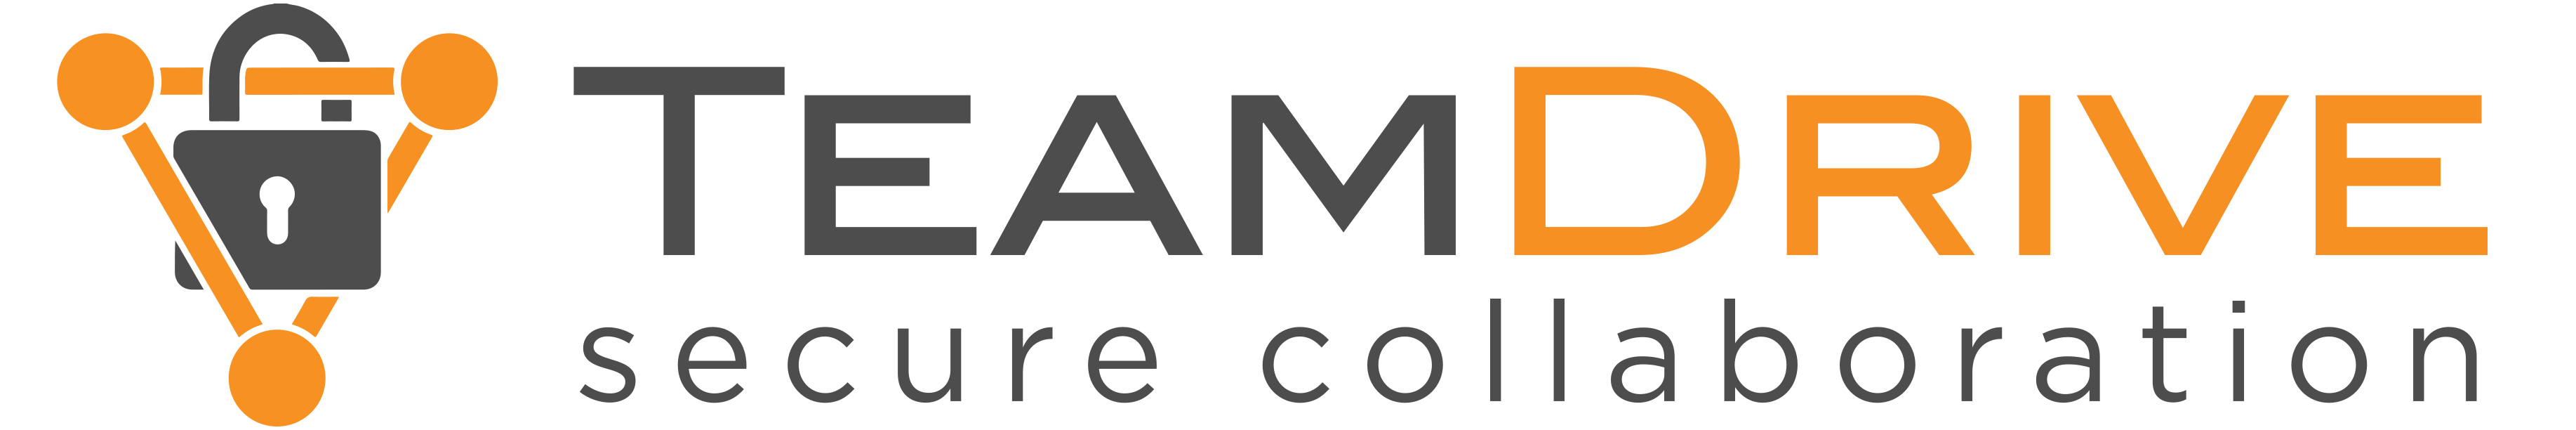 TeamDrive logo